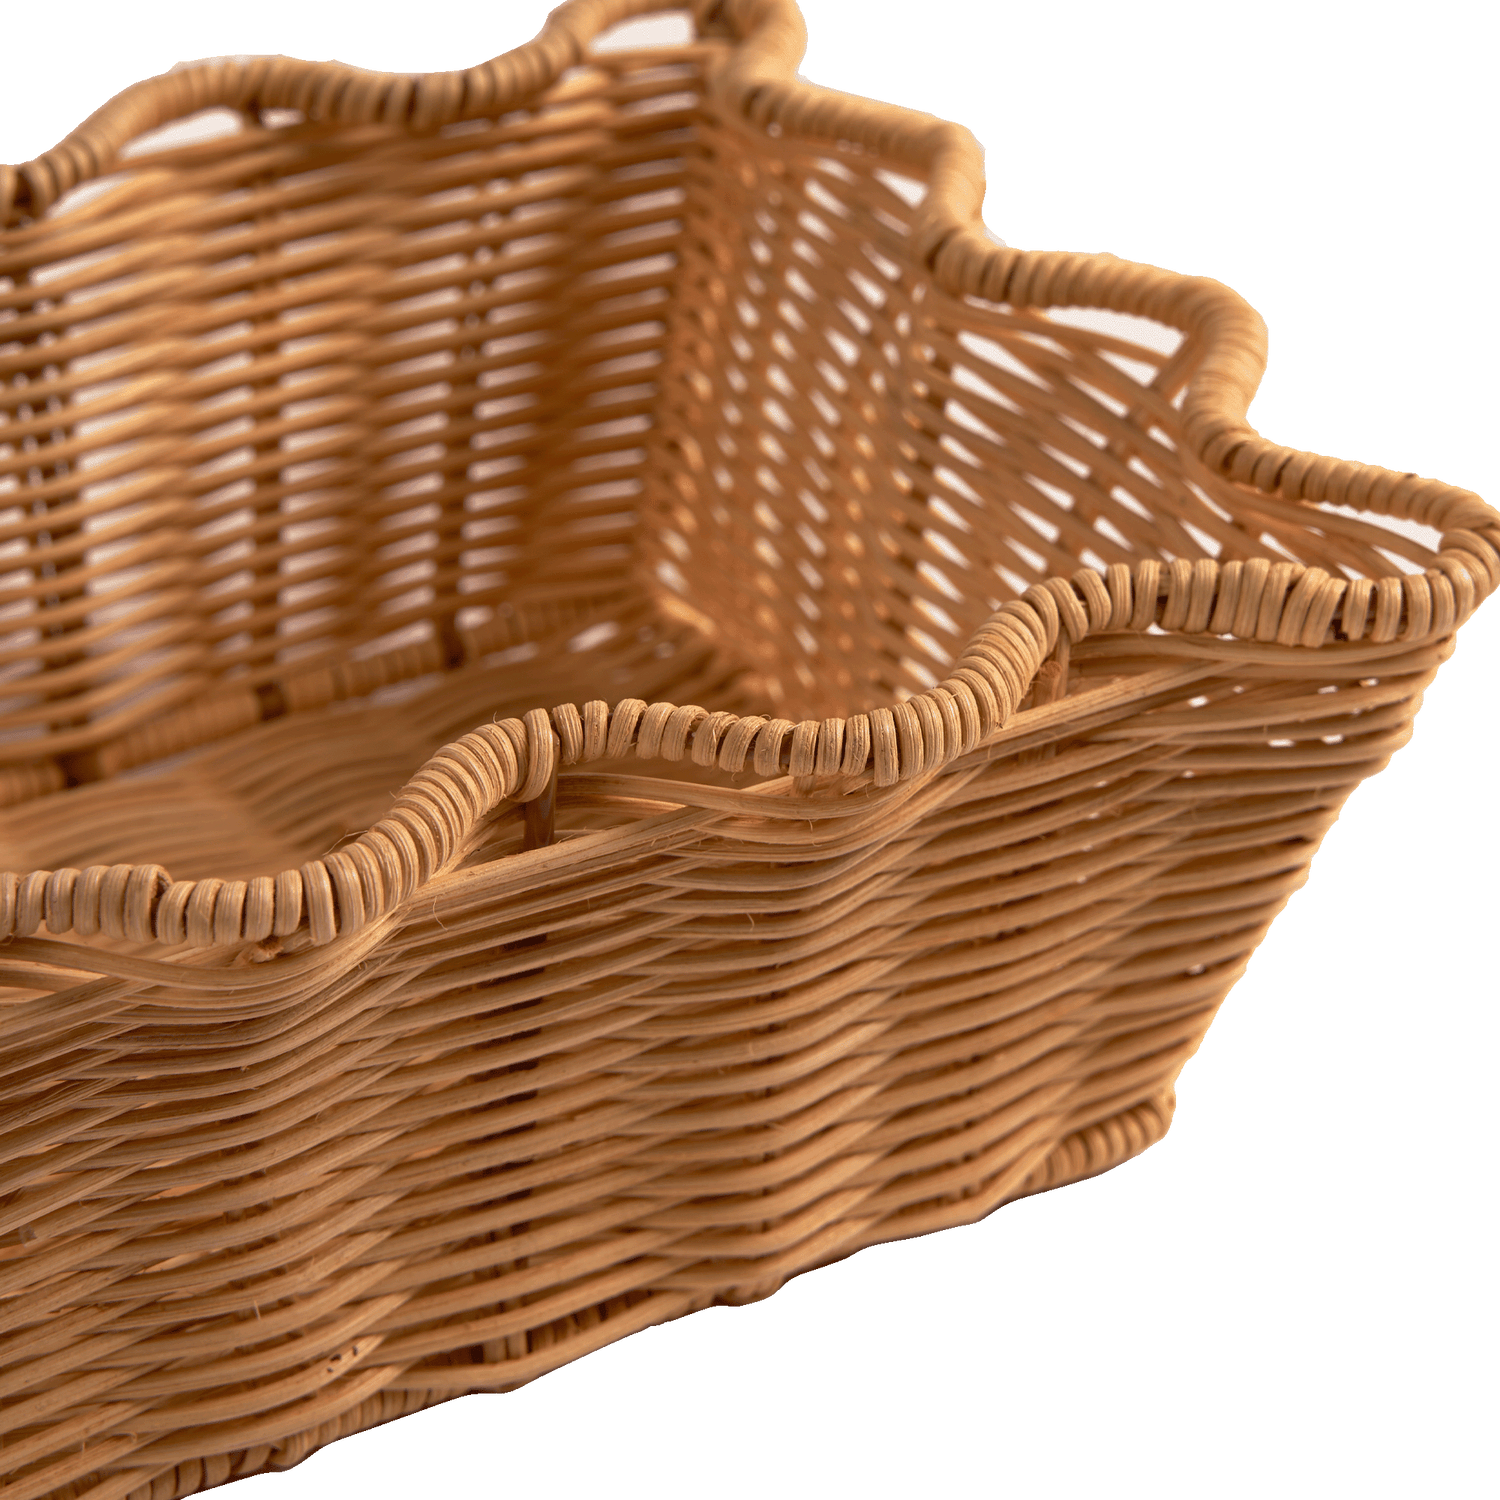 Scallop rattan basket - Natural 20x30 cm